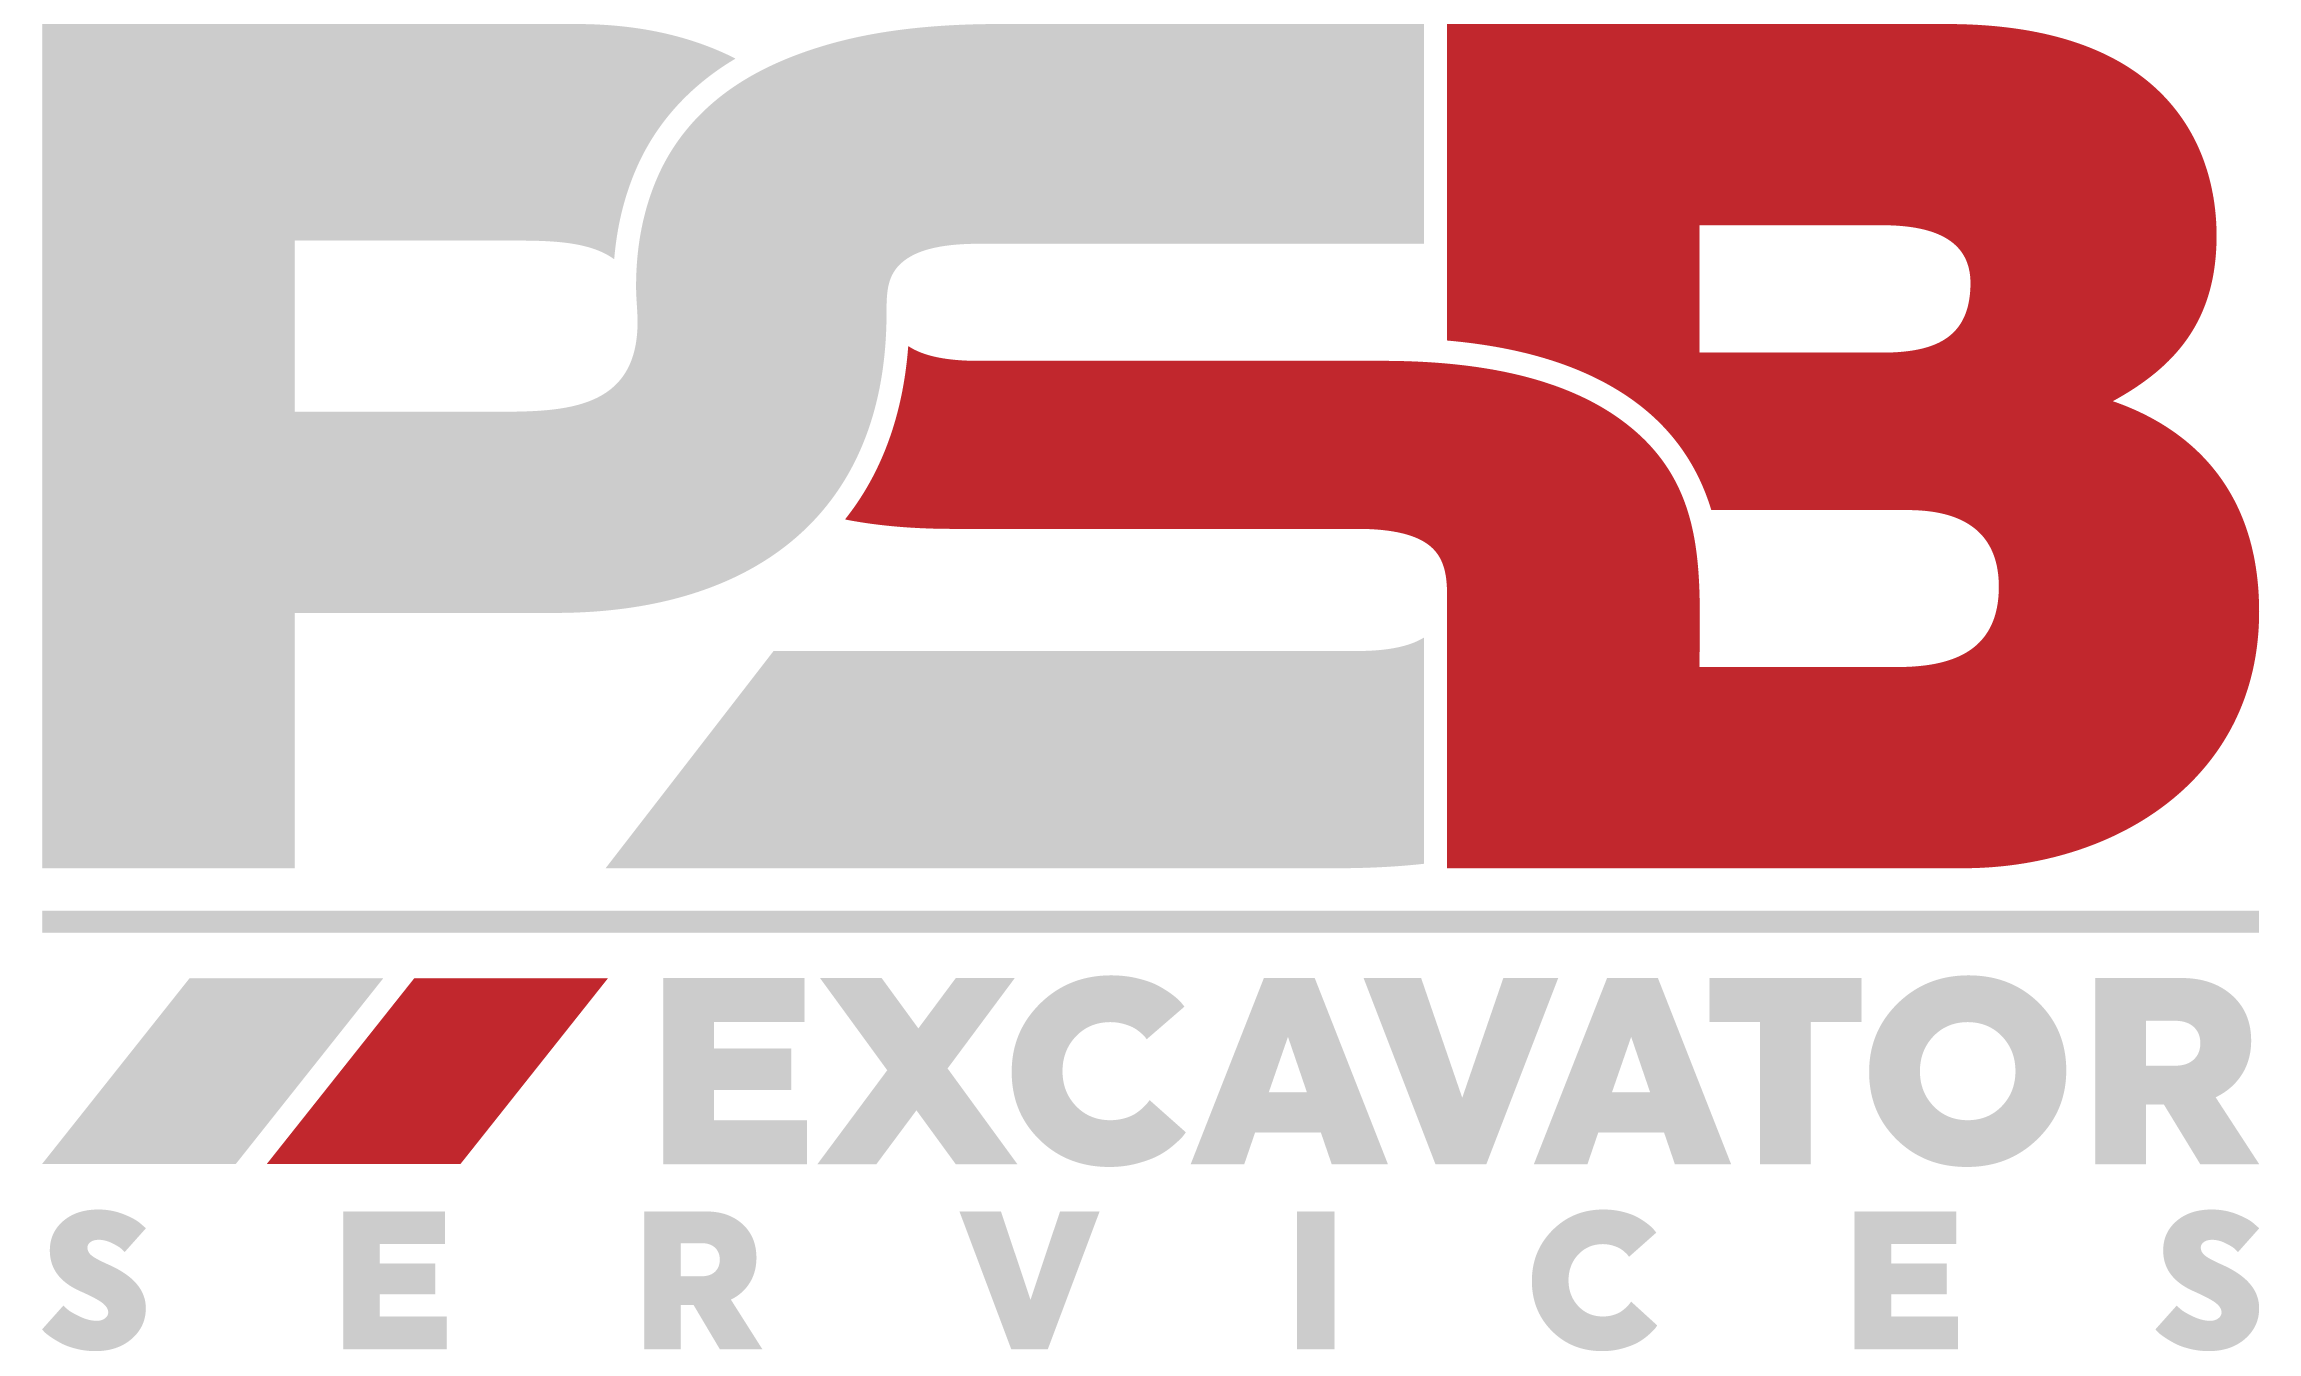 PSB Excavator Services